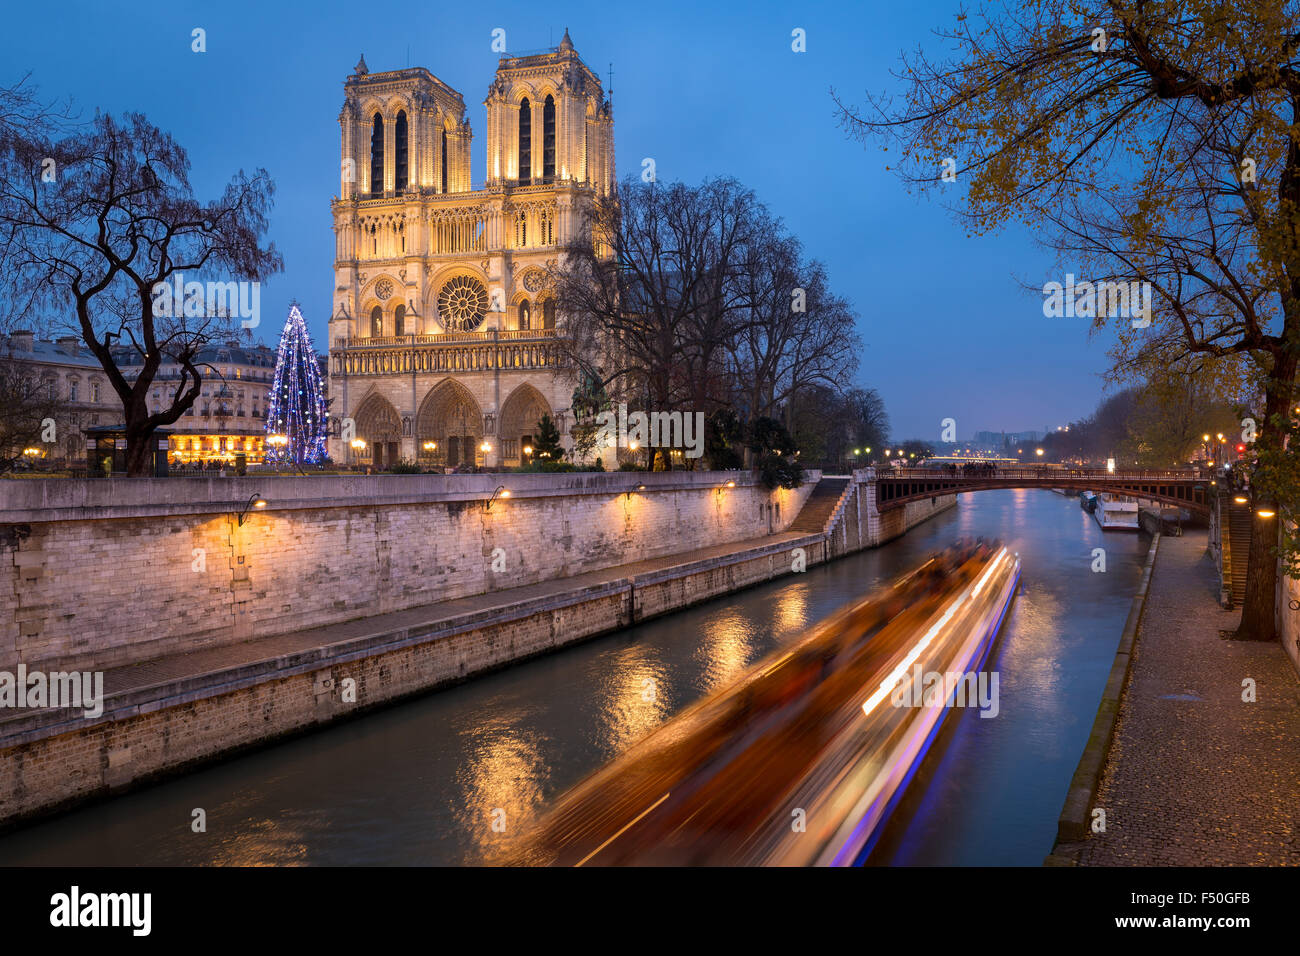 Notre Dame de Paris Cathedral and Christmas Tree Illumination in evening with the Seine River, Ile de la Cite, Paris, France Stock Photo